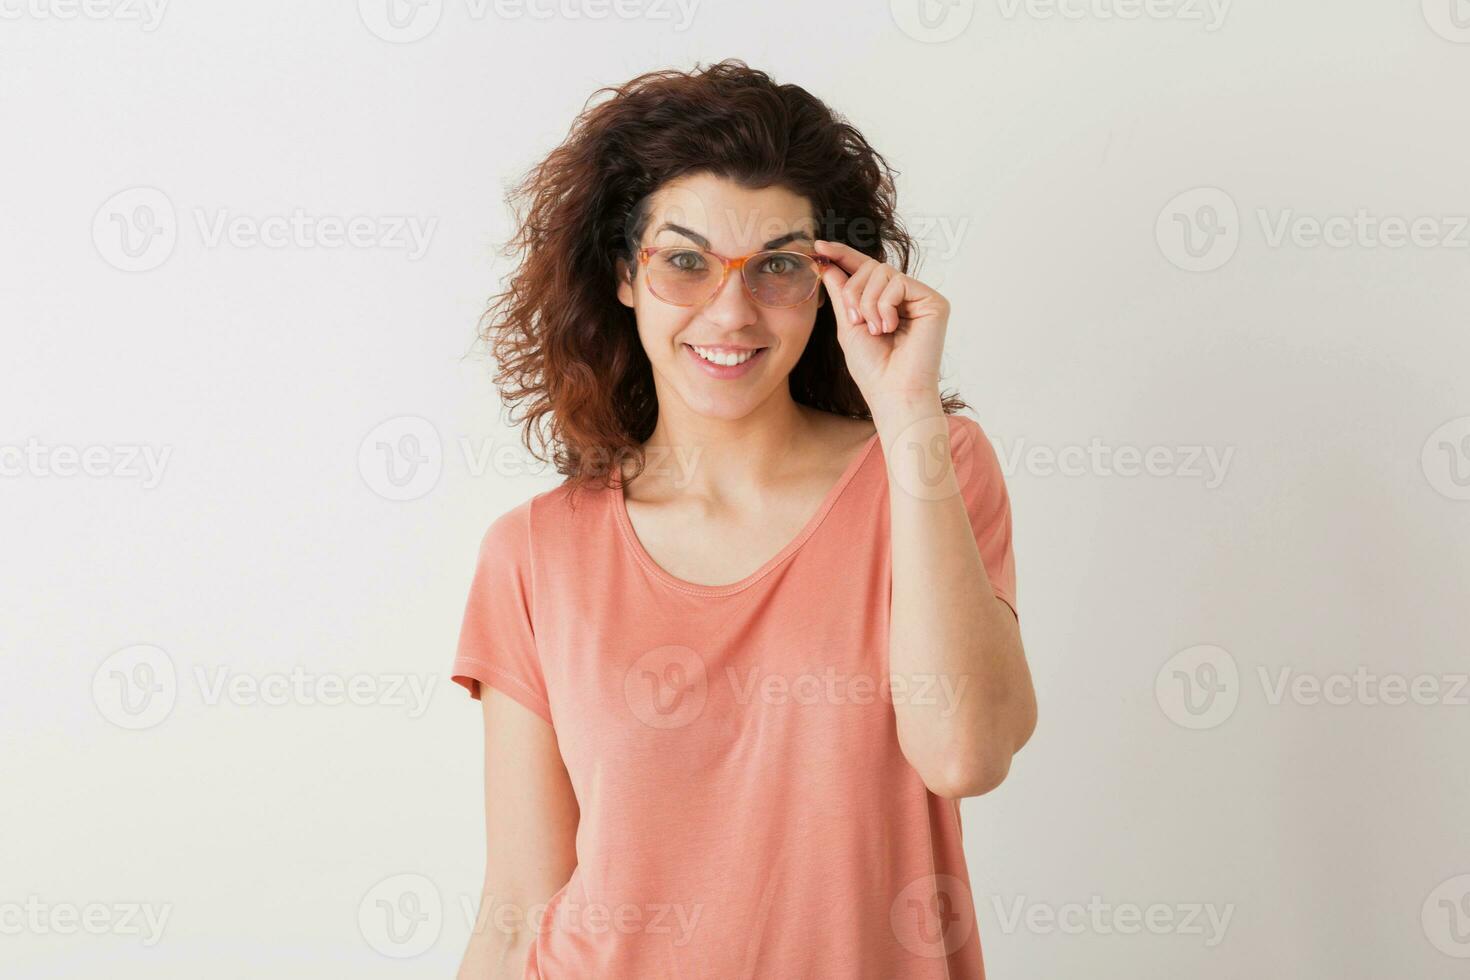 retrato do jovem natural olhando sorridente feliz hipster bonita mulher dentro Rosa camisa foto